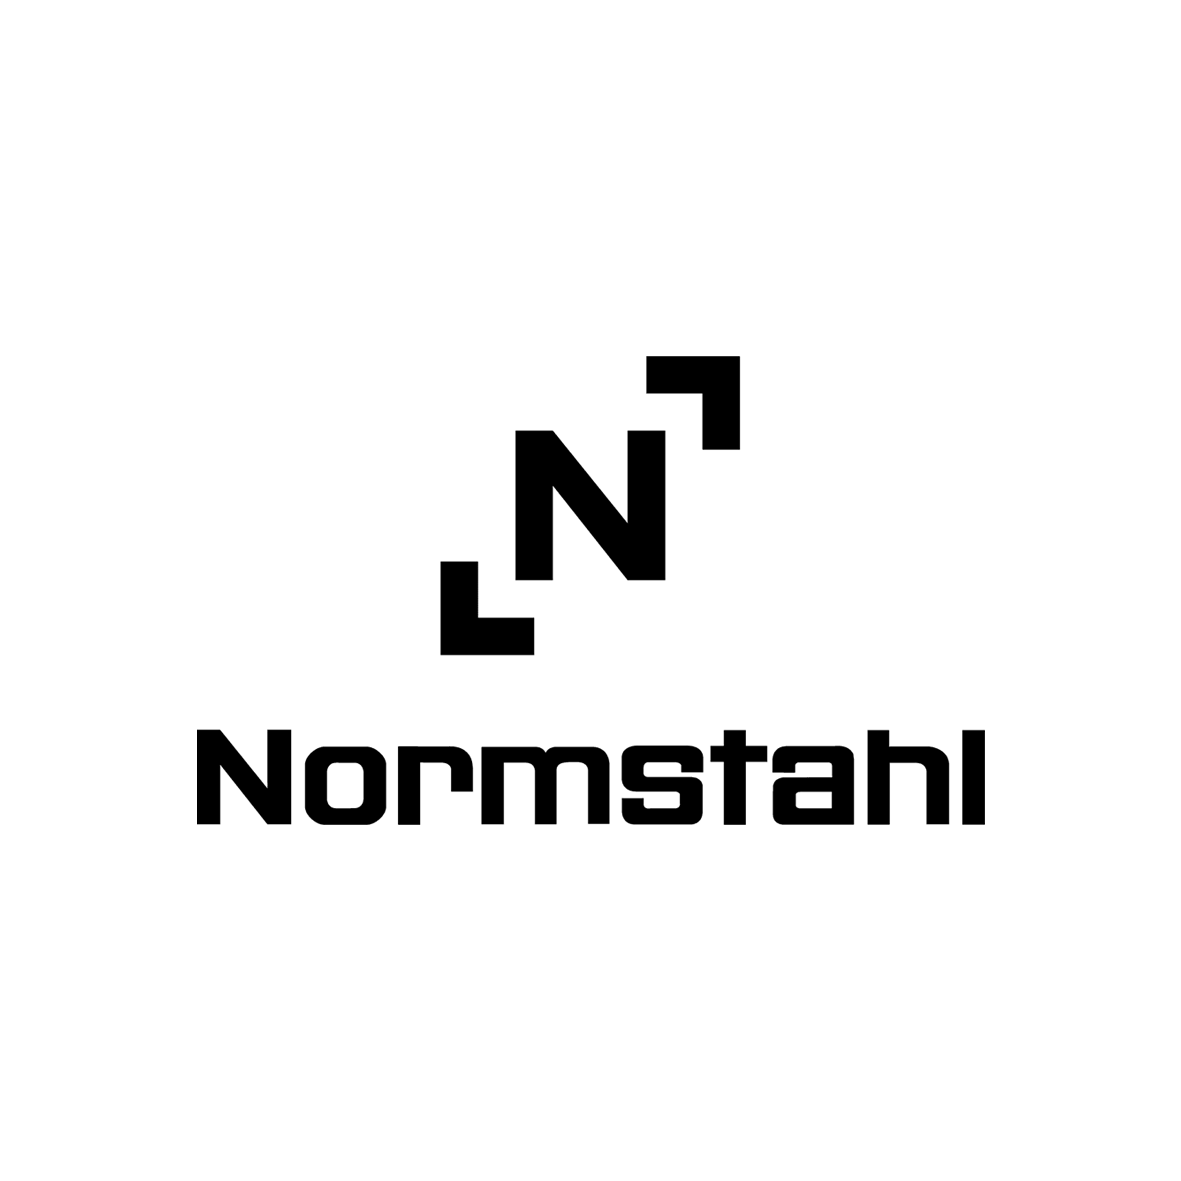 Normstahl logo